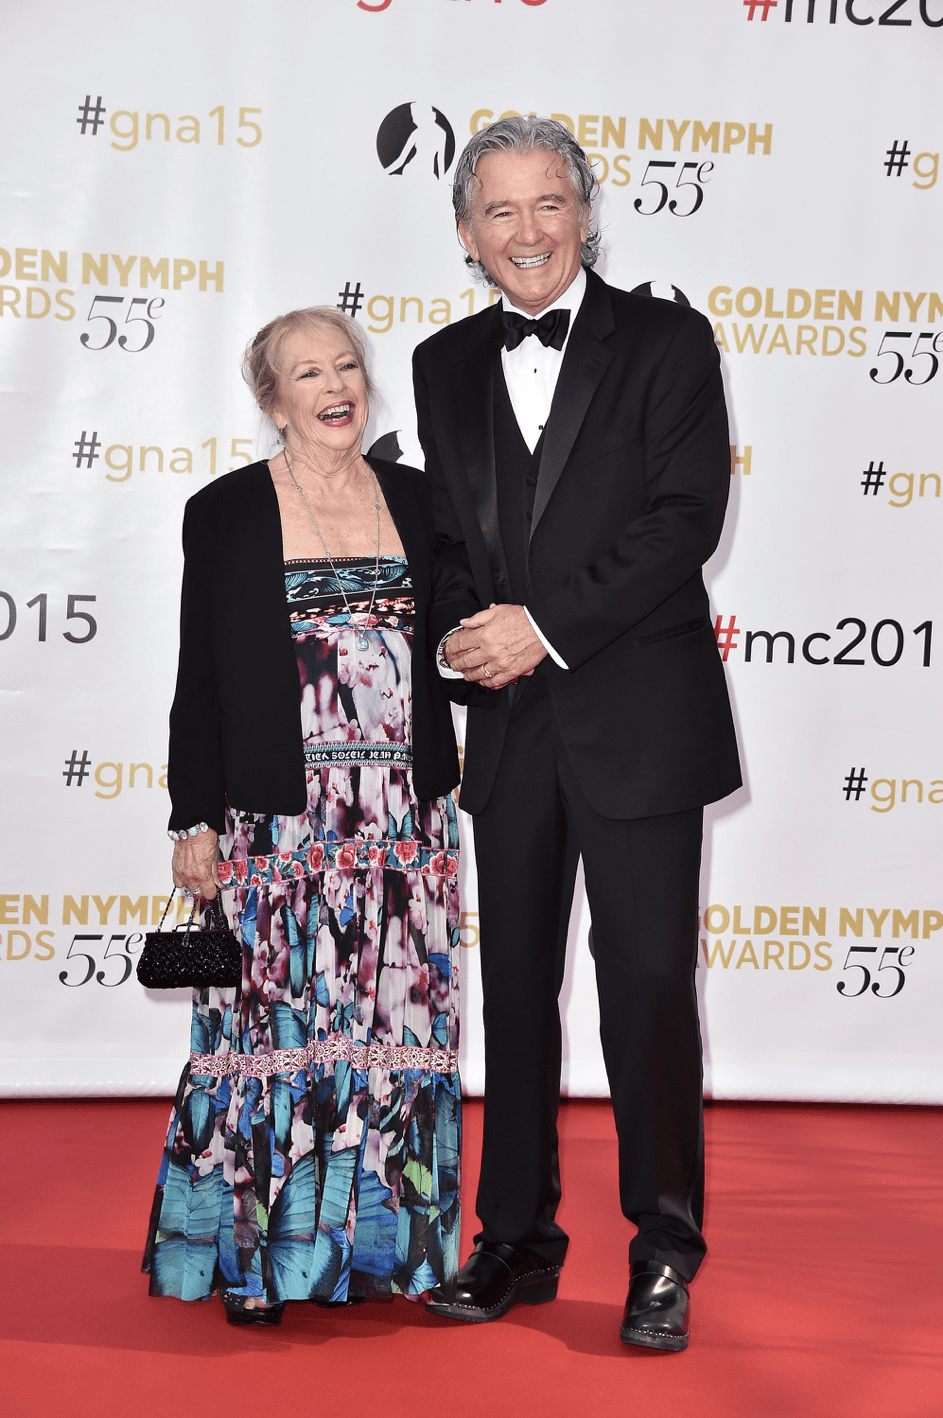 Patrick Duffy und Carlyn Rosser bei den Golden Nymph Awards am 18. Juni 2015 in Monaco. | Quelle: Getty Images